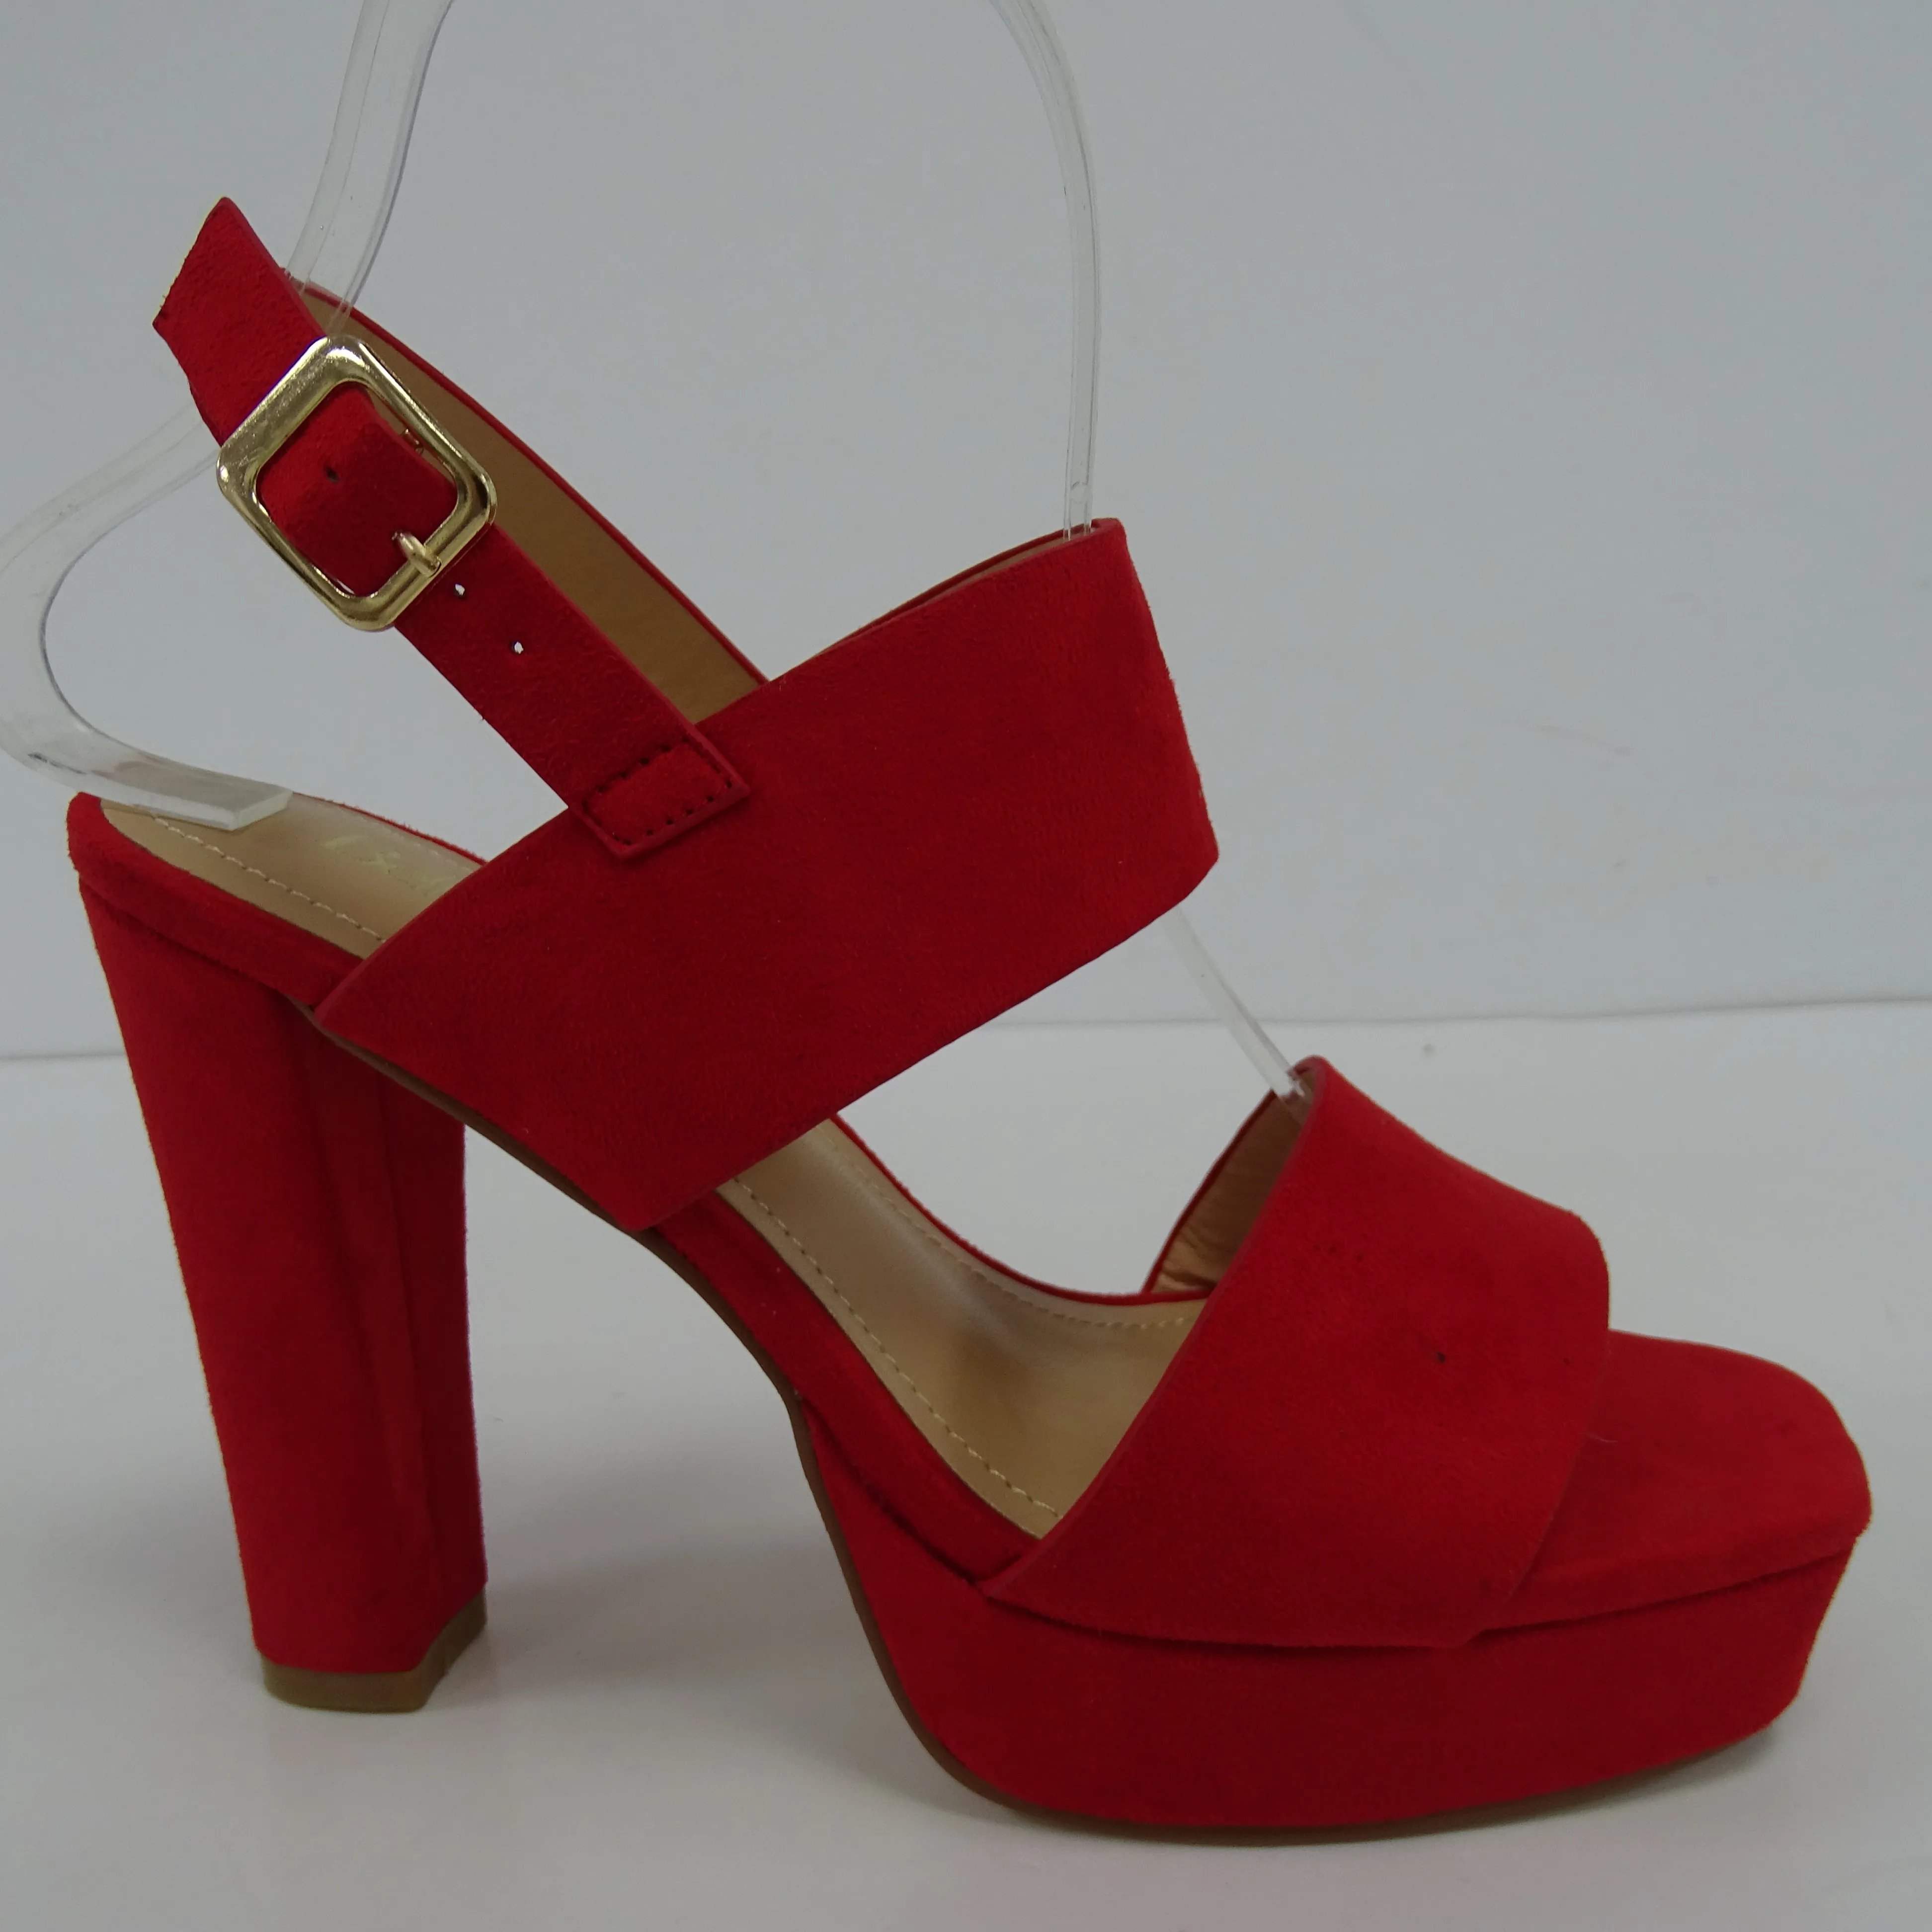 PDEP Colorful Talon High Heel Women Dress Shoes Pumps Shoes Heels for Ladies Hot Sale Factory Price Heel 11 5 Cm Big Size 42 Red